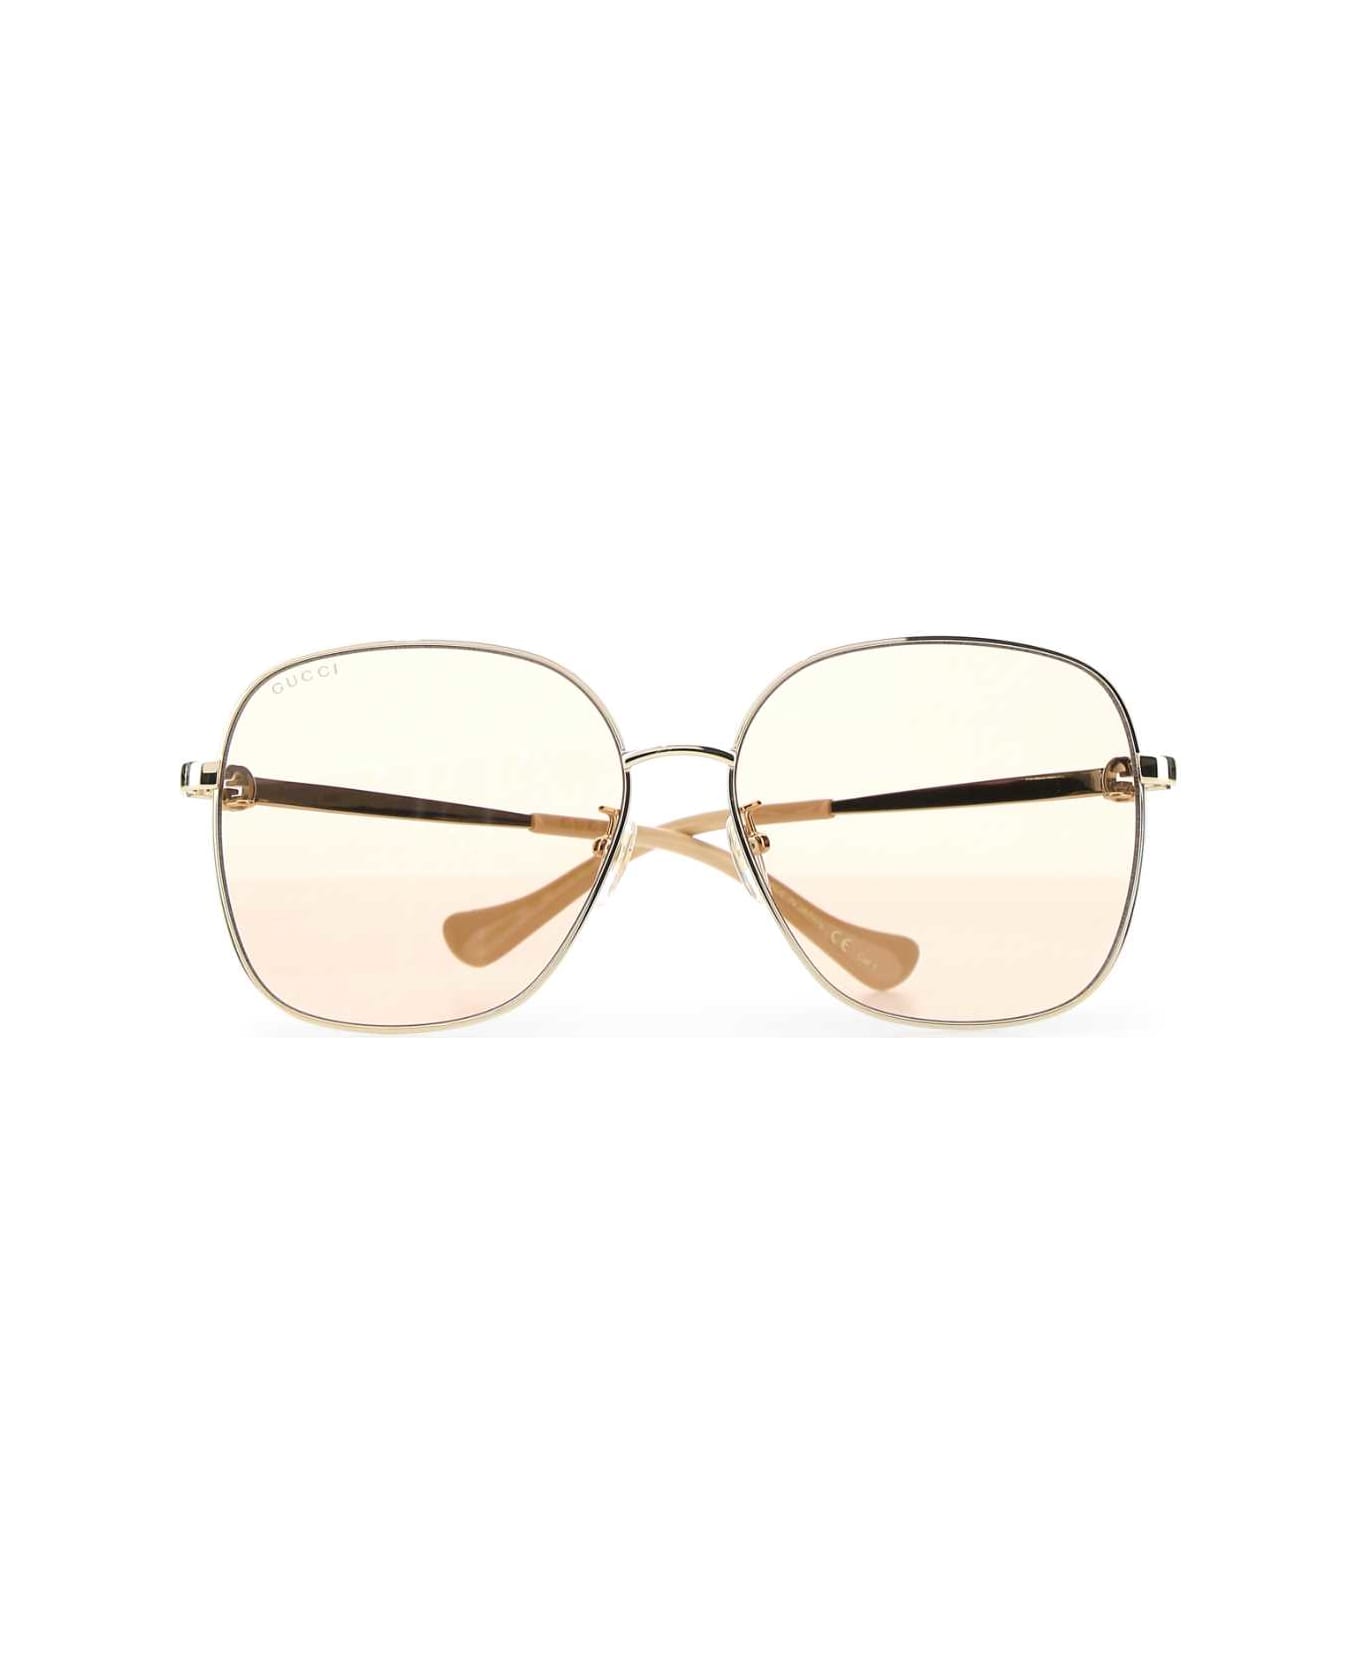 Gucci Gold Metal Sunglasses - 8059 サングラス